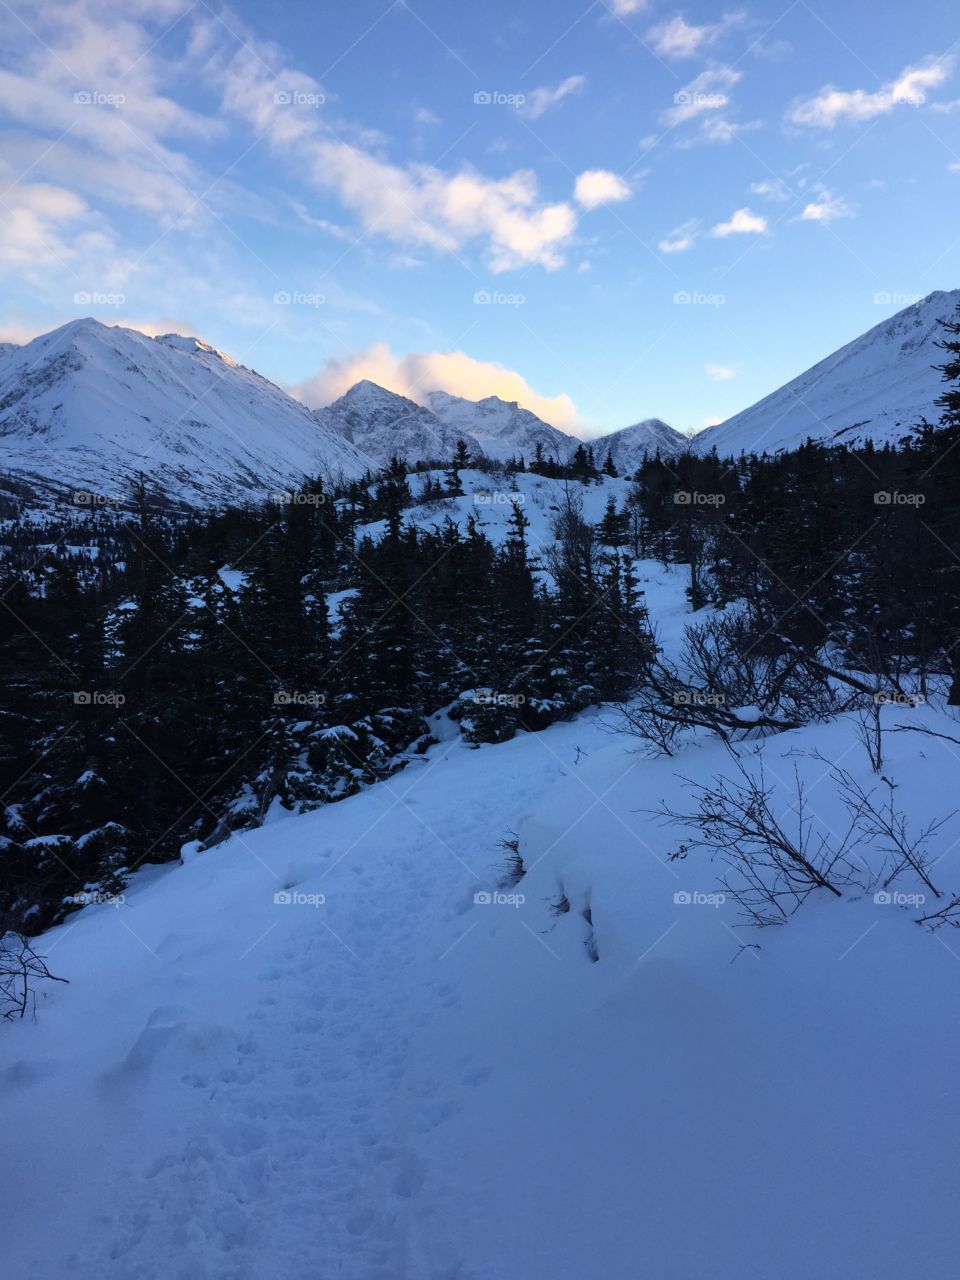 Mountain range in winter